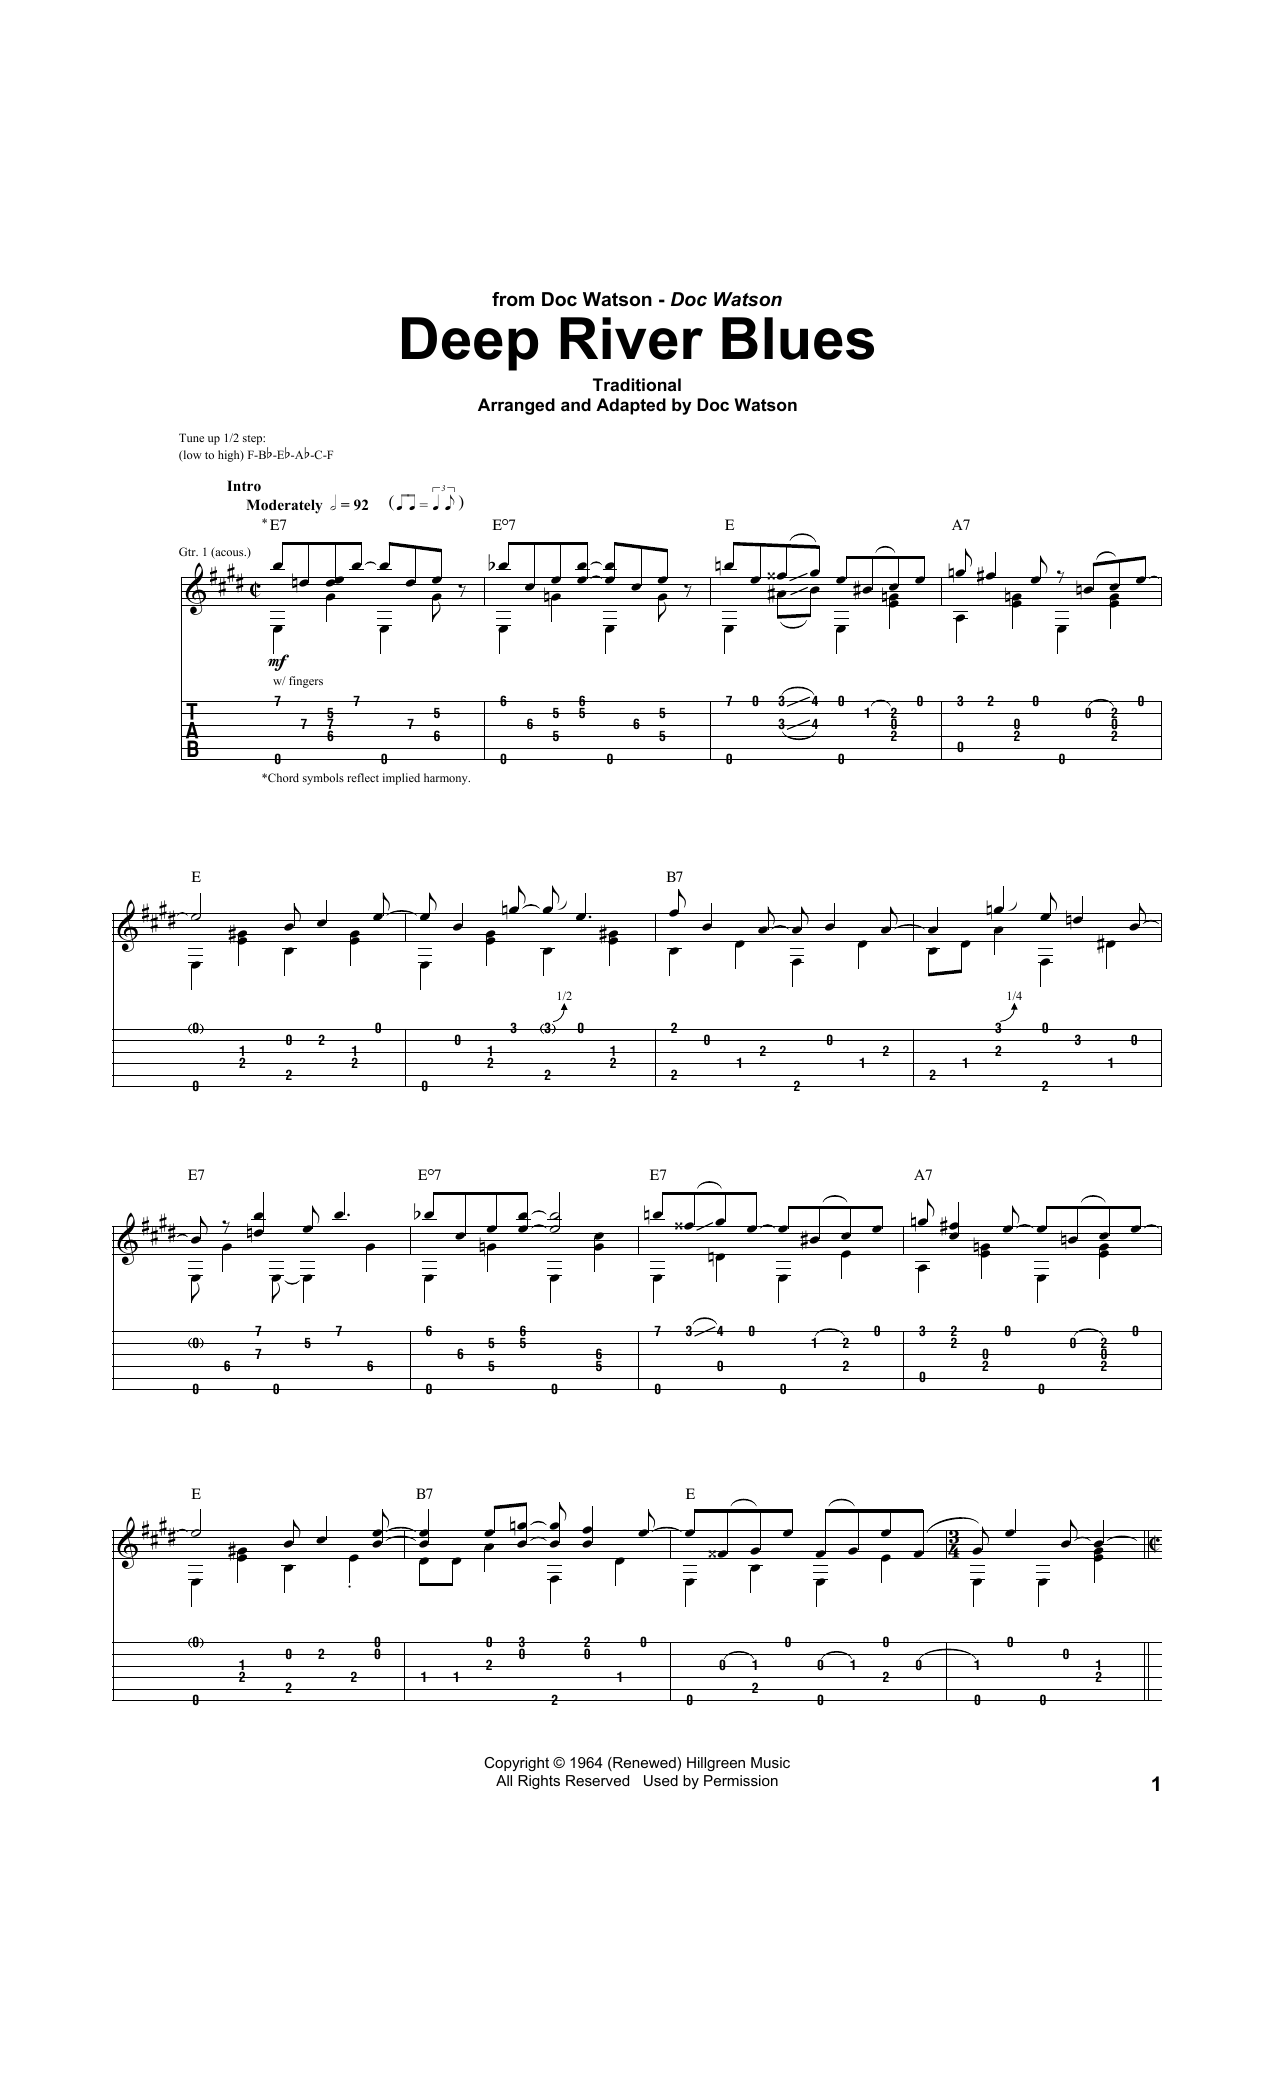 Doc Watson Deep River Blues Sheet Music Notes & Chords for Guitar Lead Sheet - Download or Print PDF